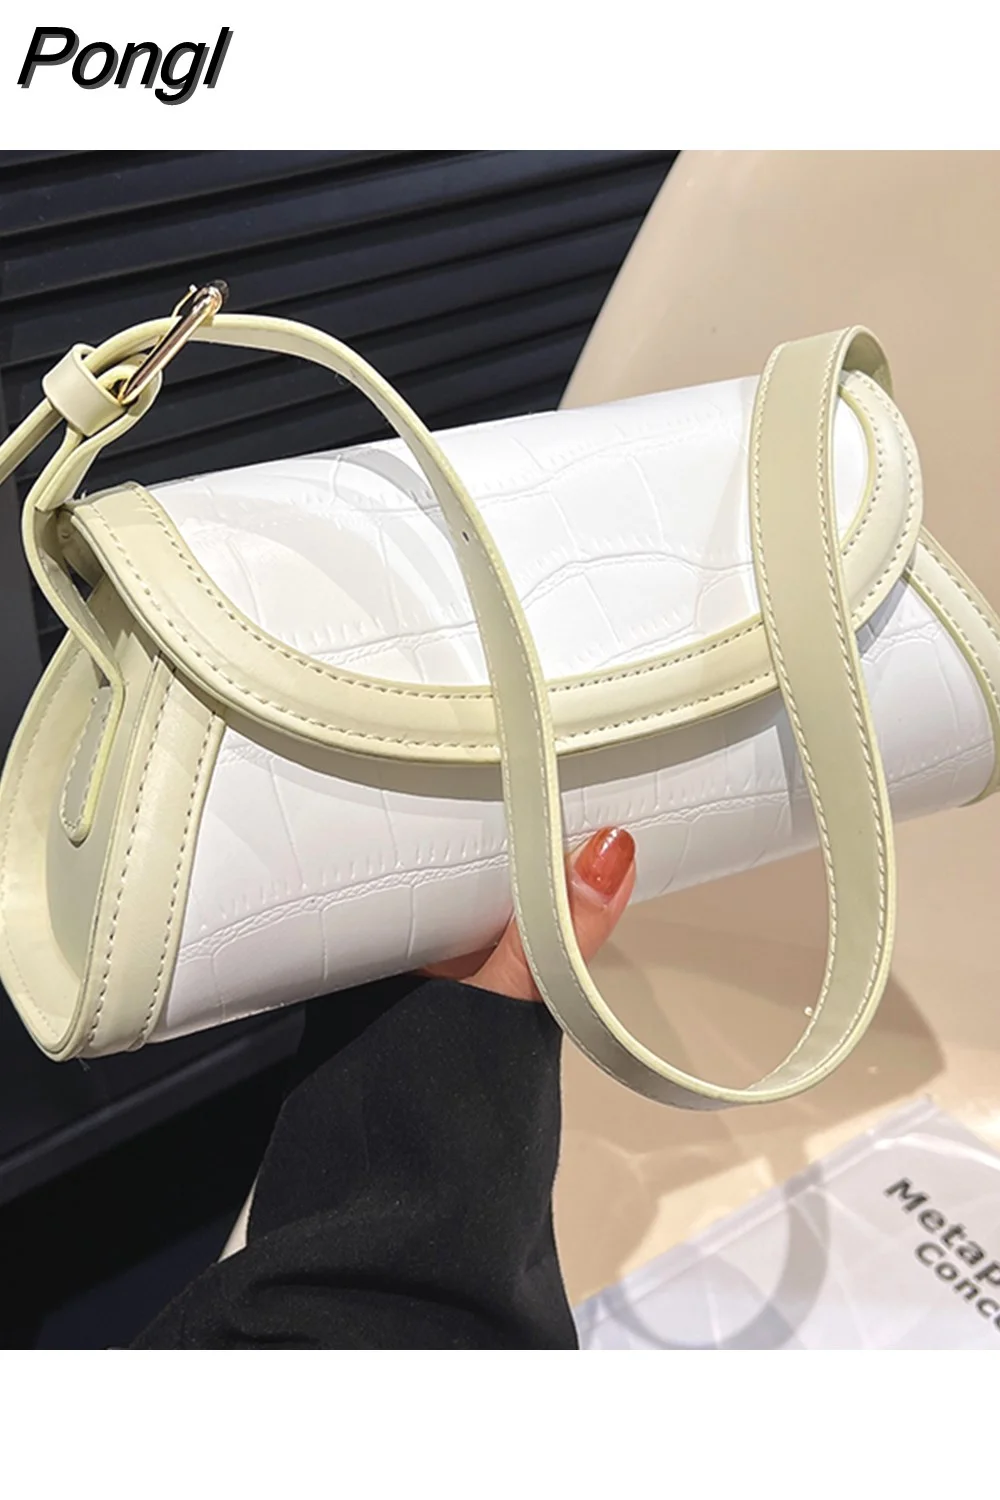 Pongl Crossbody For Women Luxury Designer Summer Casual High Quality Shoulder Bags New 2023 Fashion Versatile Leather Handbags